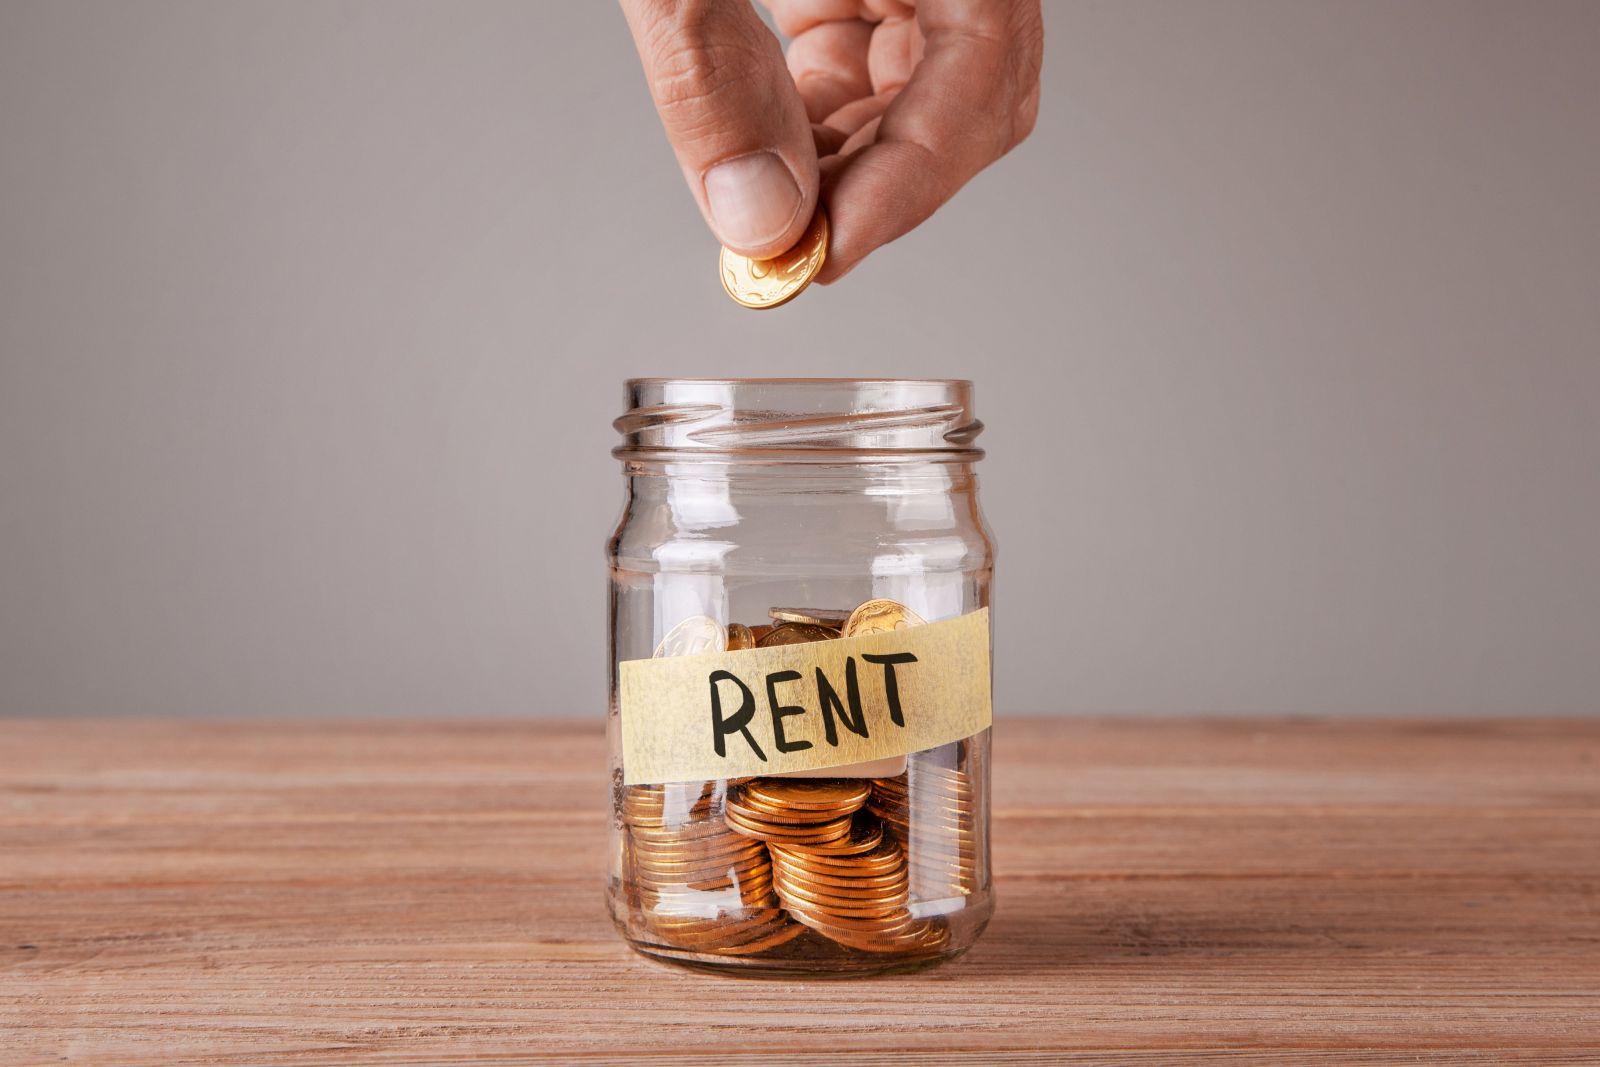 How Can Rental Deposit Alternatives Help & Hurt The Market?